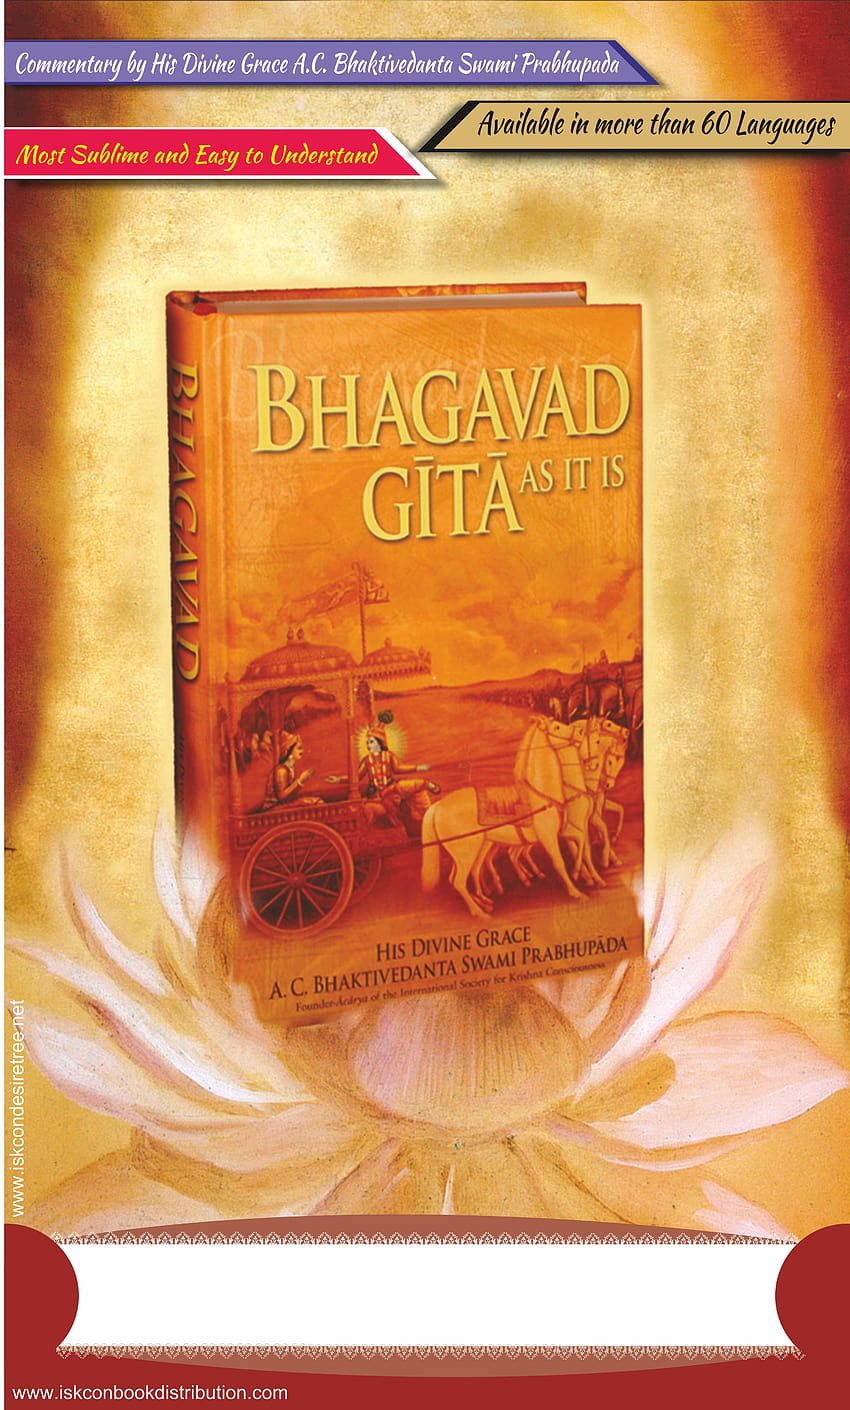 Pembagian Buku Spanduk Bhagavad Gita wallpaper ponsel HD